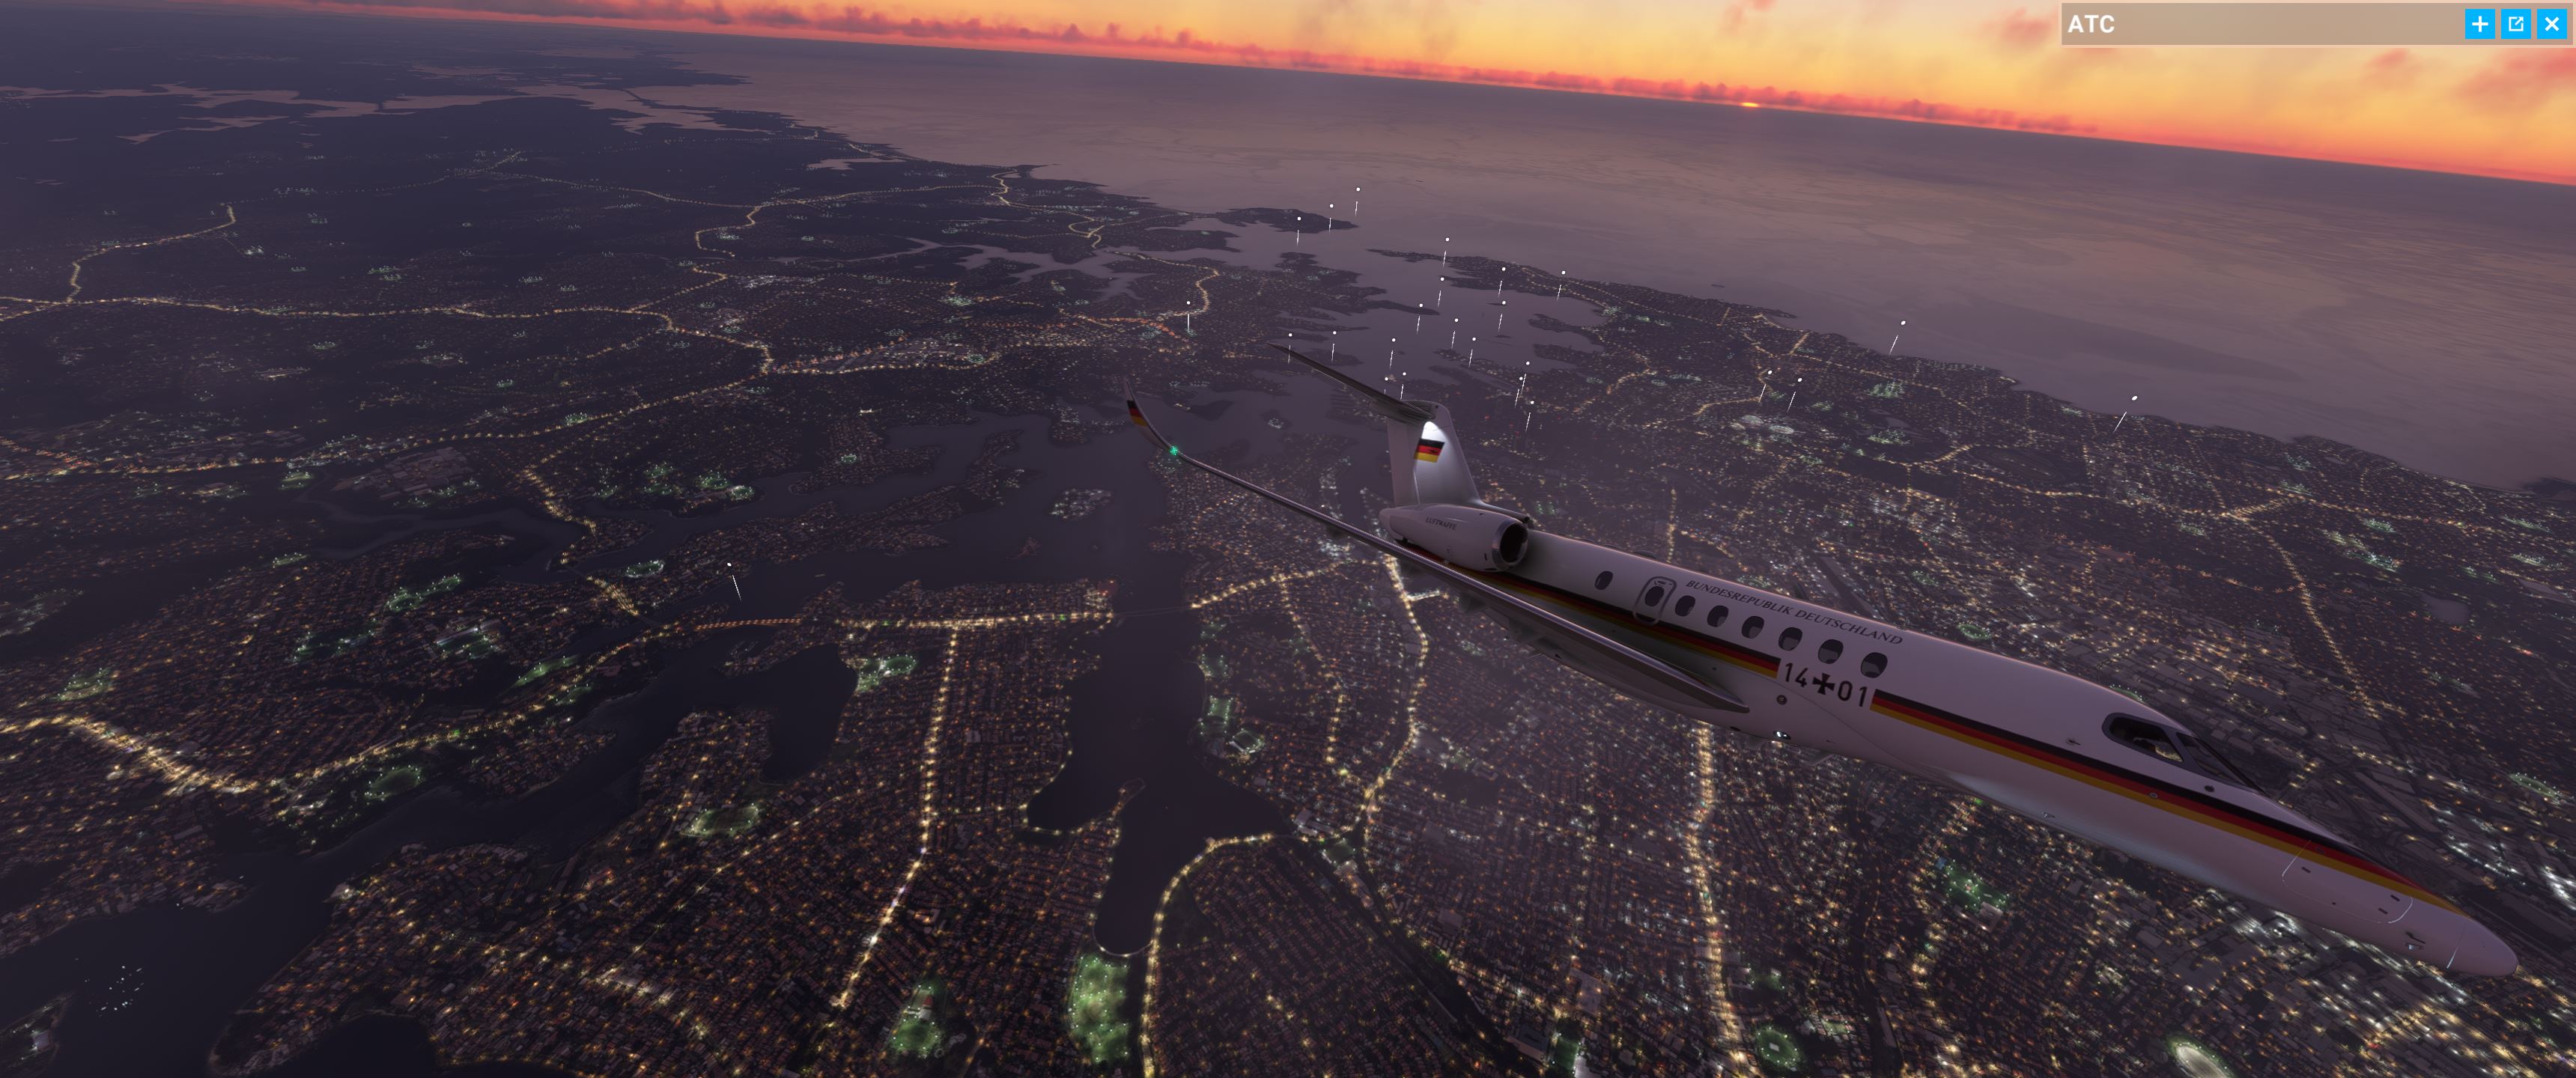 2022-09-18 21_42_29-Microsoft Flight Simulator - 1.26.5.0.jpg